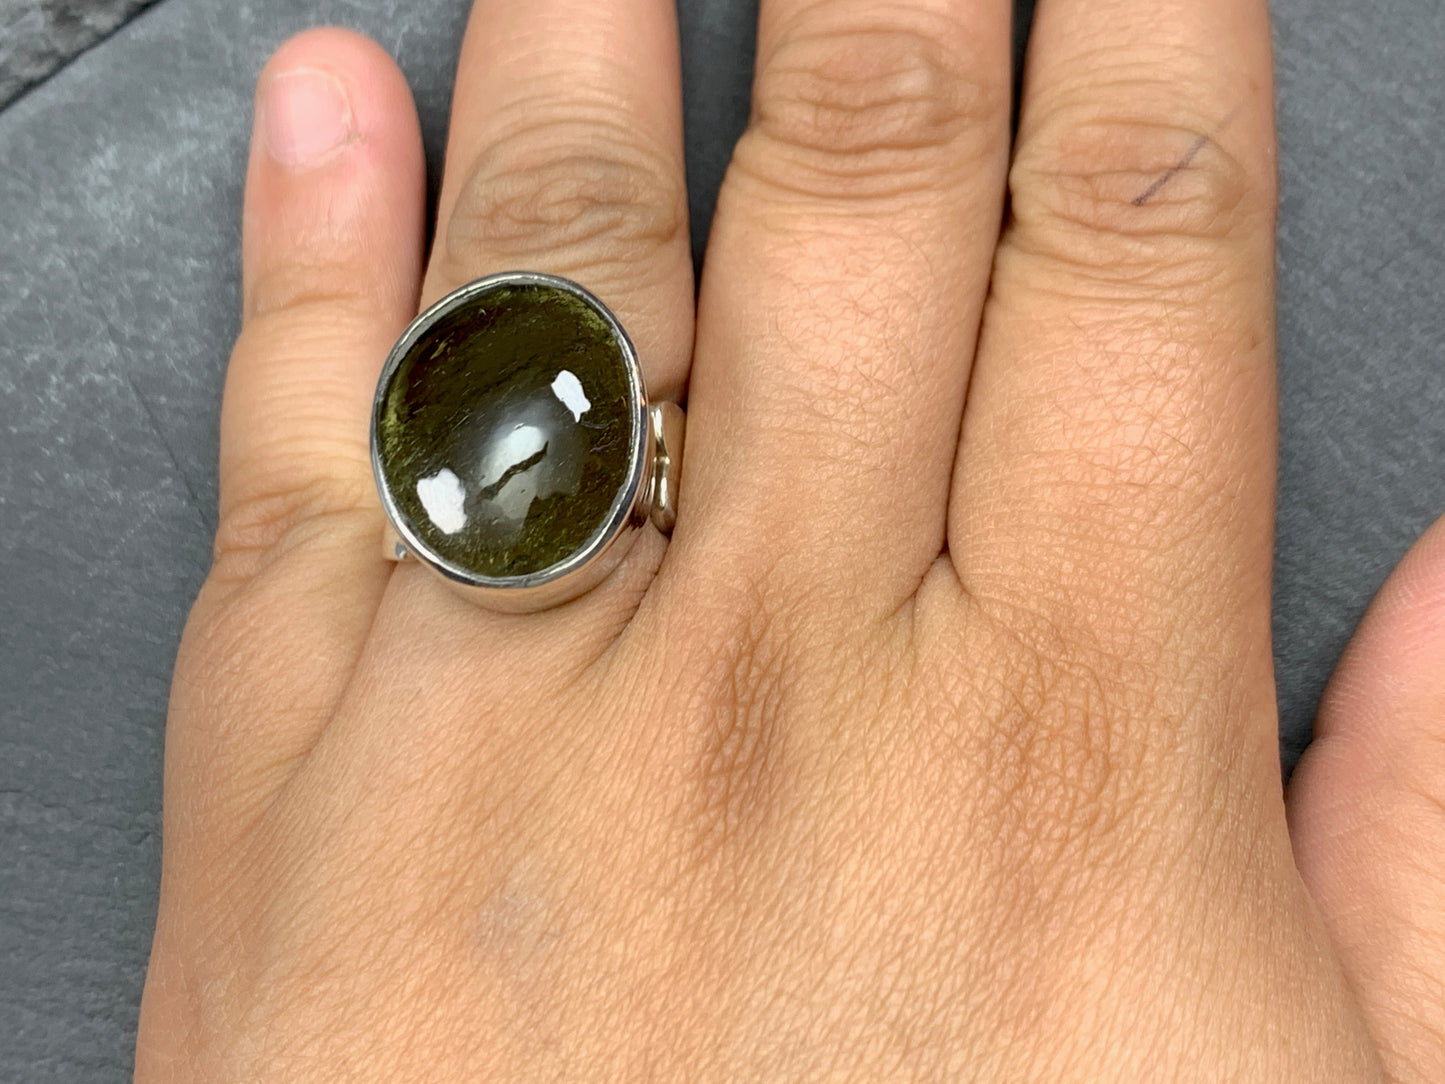 Oval ring with Large Polished Moldavite, one of a kind- adjustable/ size 7.0US